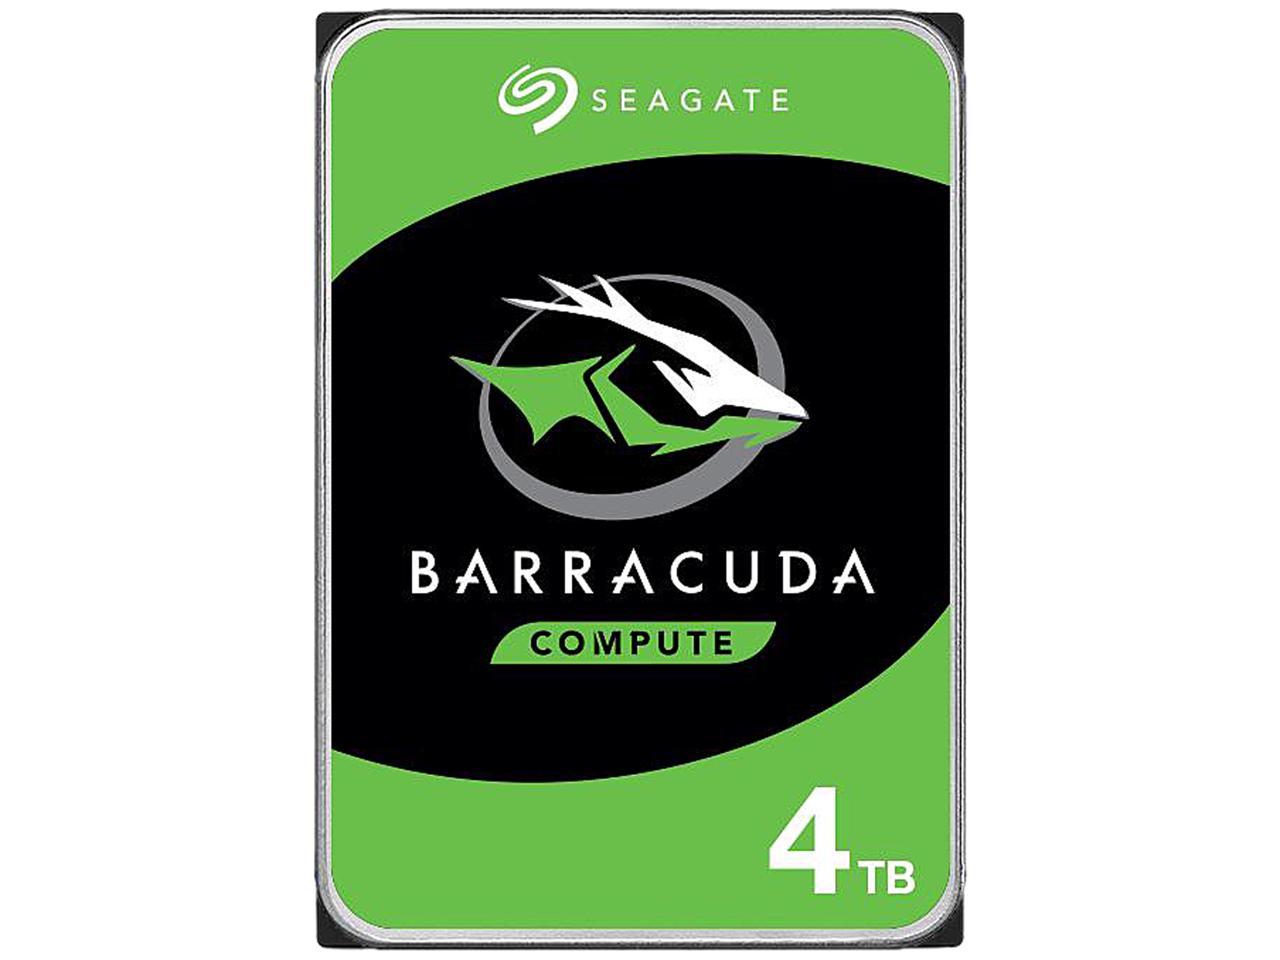 Seagate BarraCuda ST4000DM004 4TB 5400 RPM 256MB Cache SATA 6.0Gb/s 3.5" Hard Drives Bare Drive